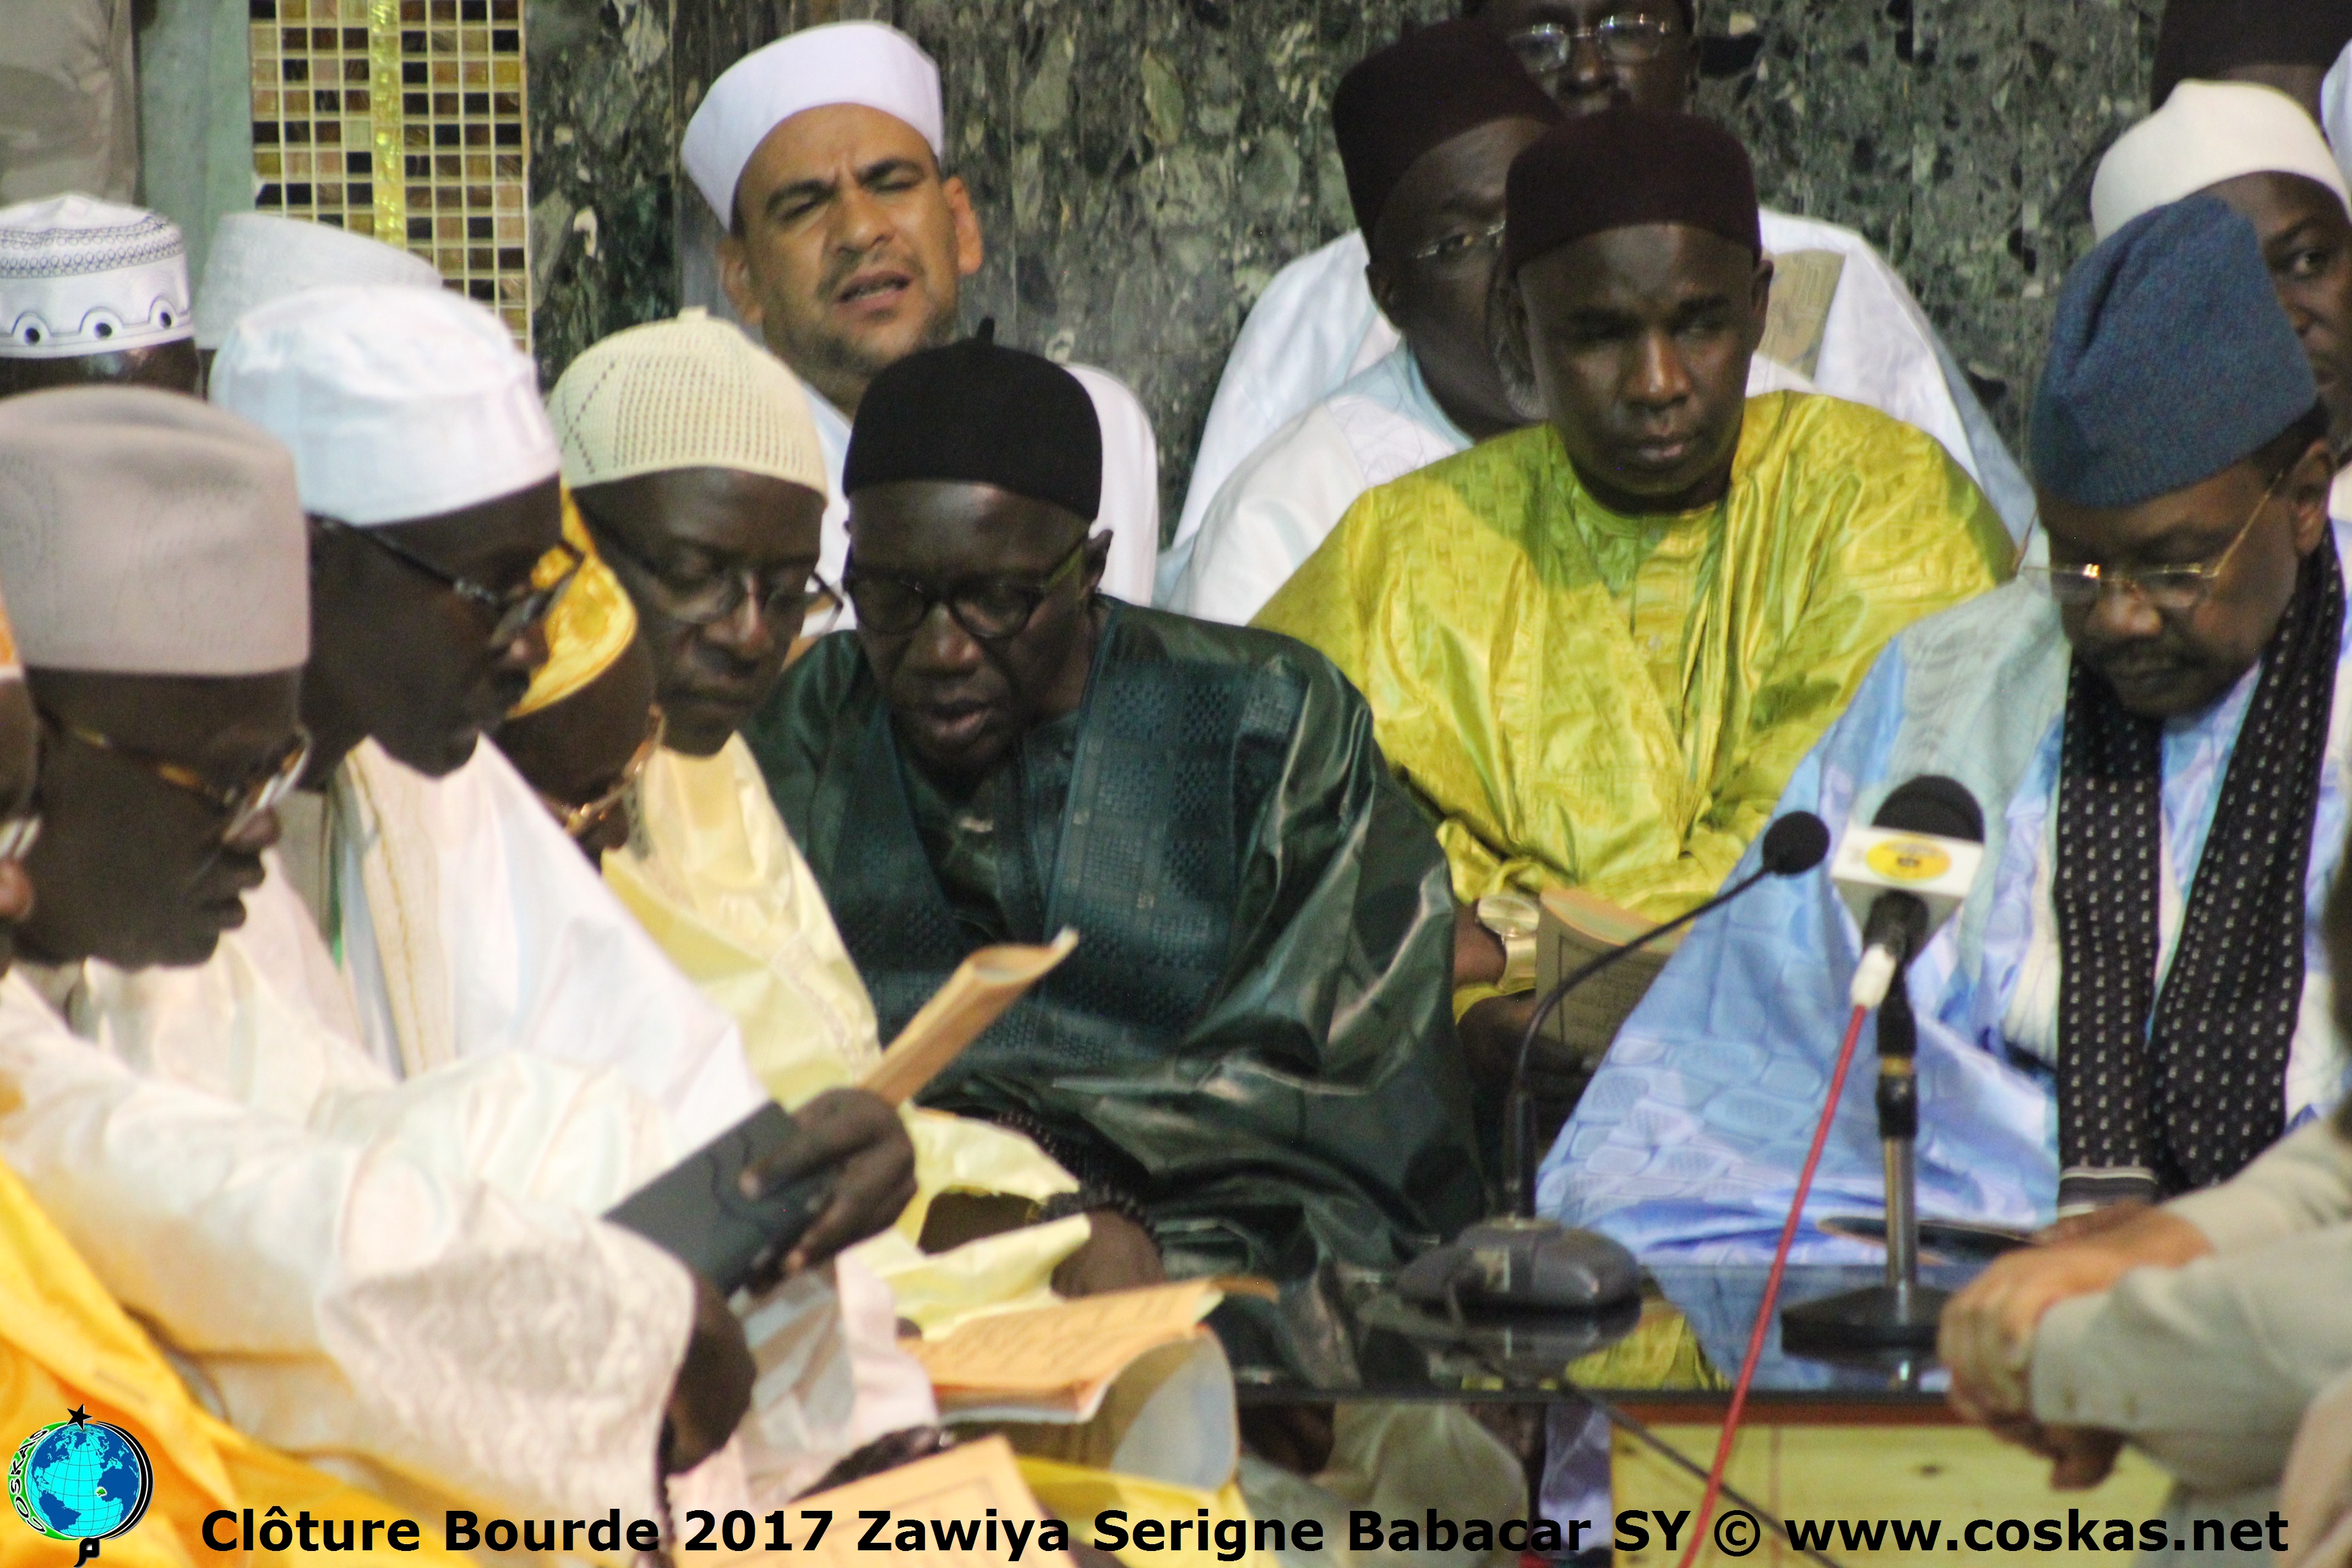 [Images]: Clôture Bourde 2017 Zawiya Serigne Babacar SY